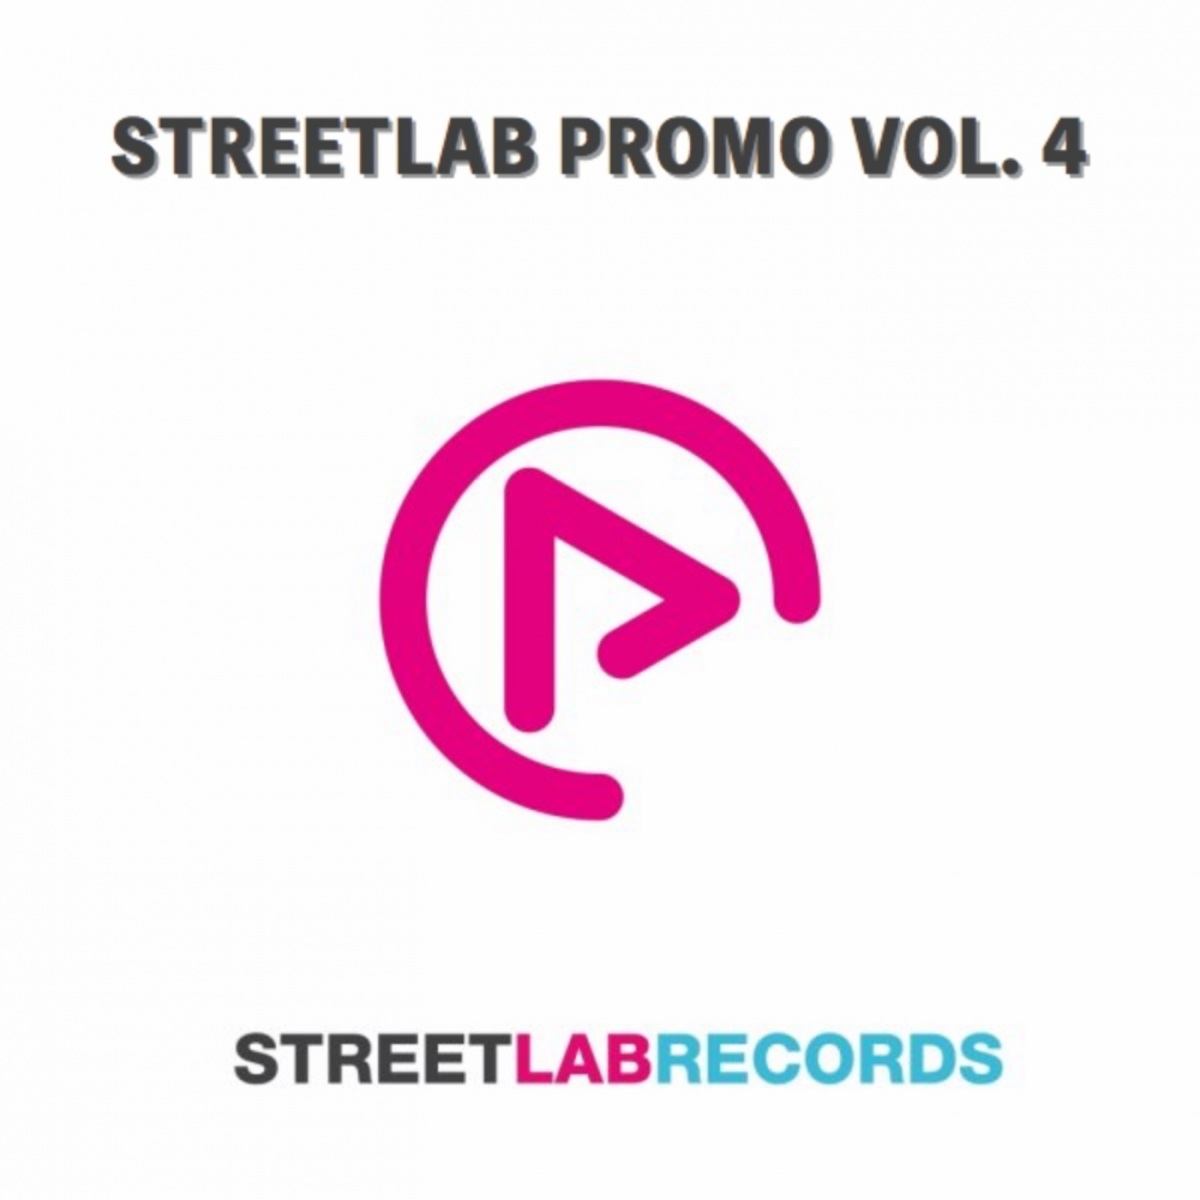 VA - Streetlab Promo, Vol. 4 / Streetlab Records